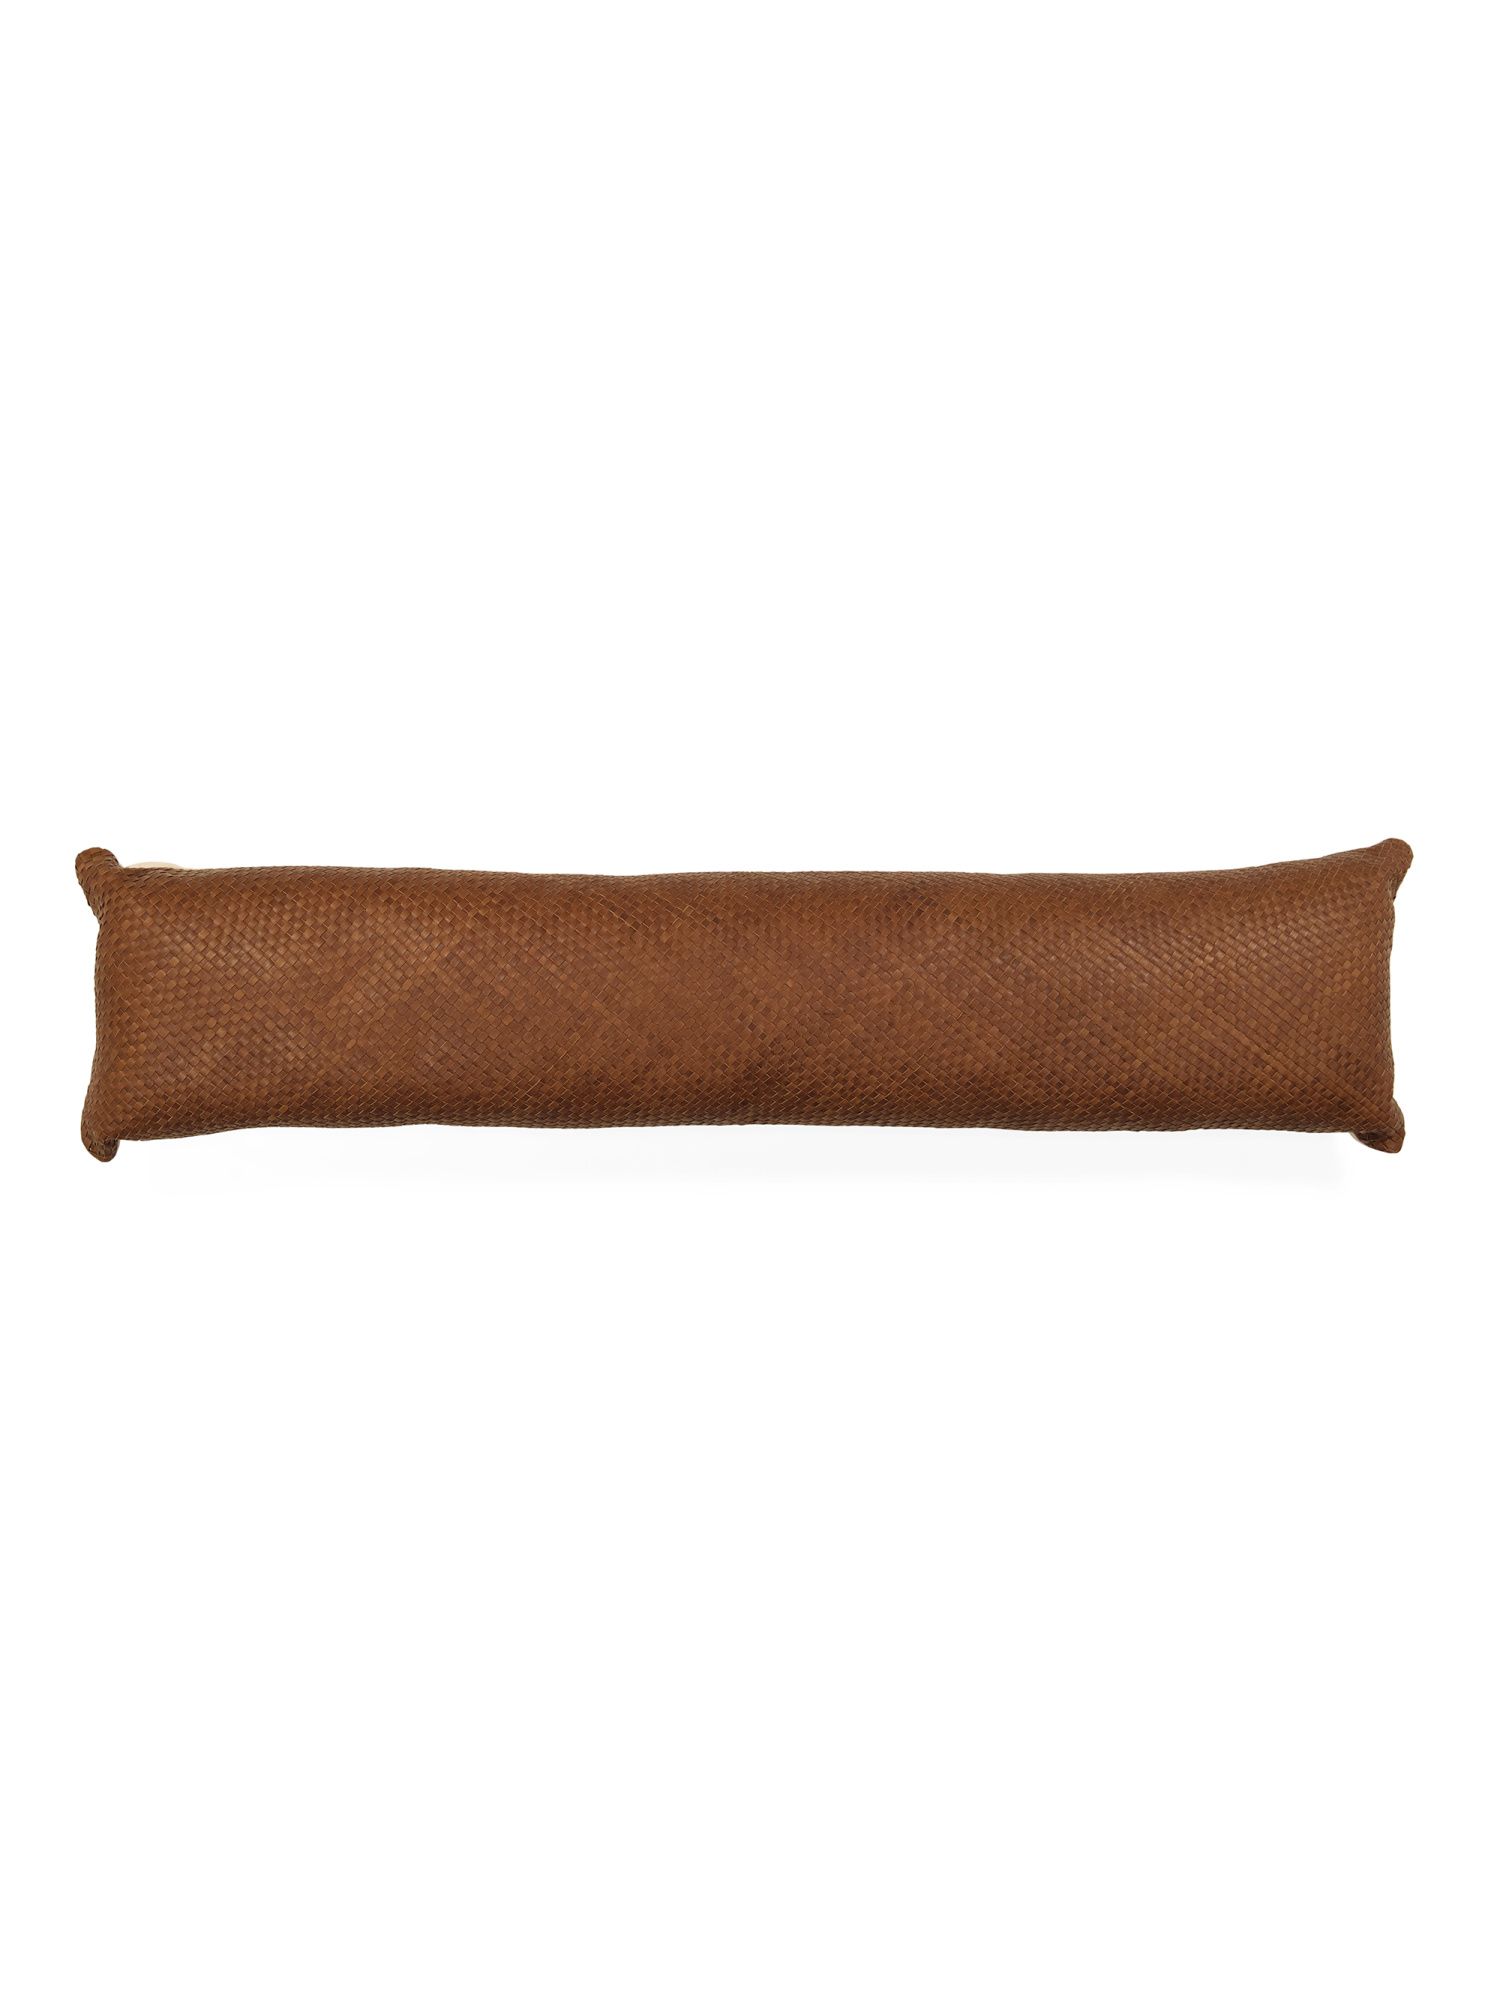 12x48 Genuine Leather Oversized Lumbar Pillow | TJ Maxx